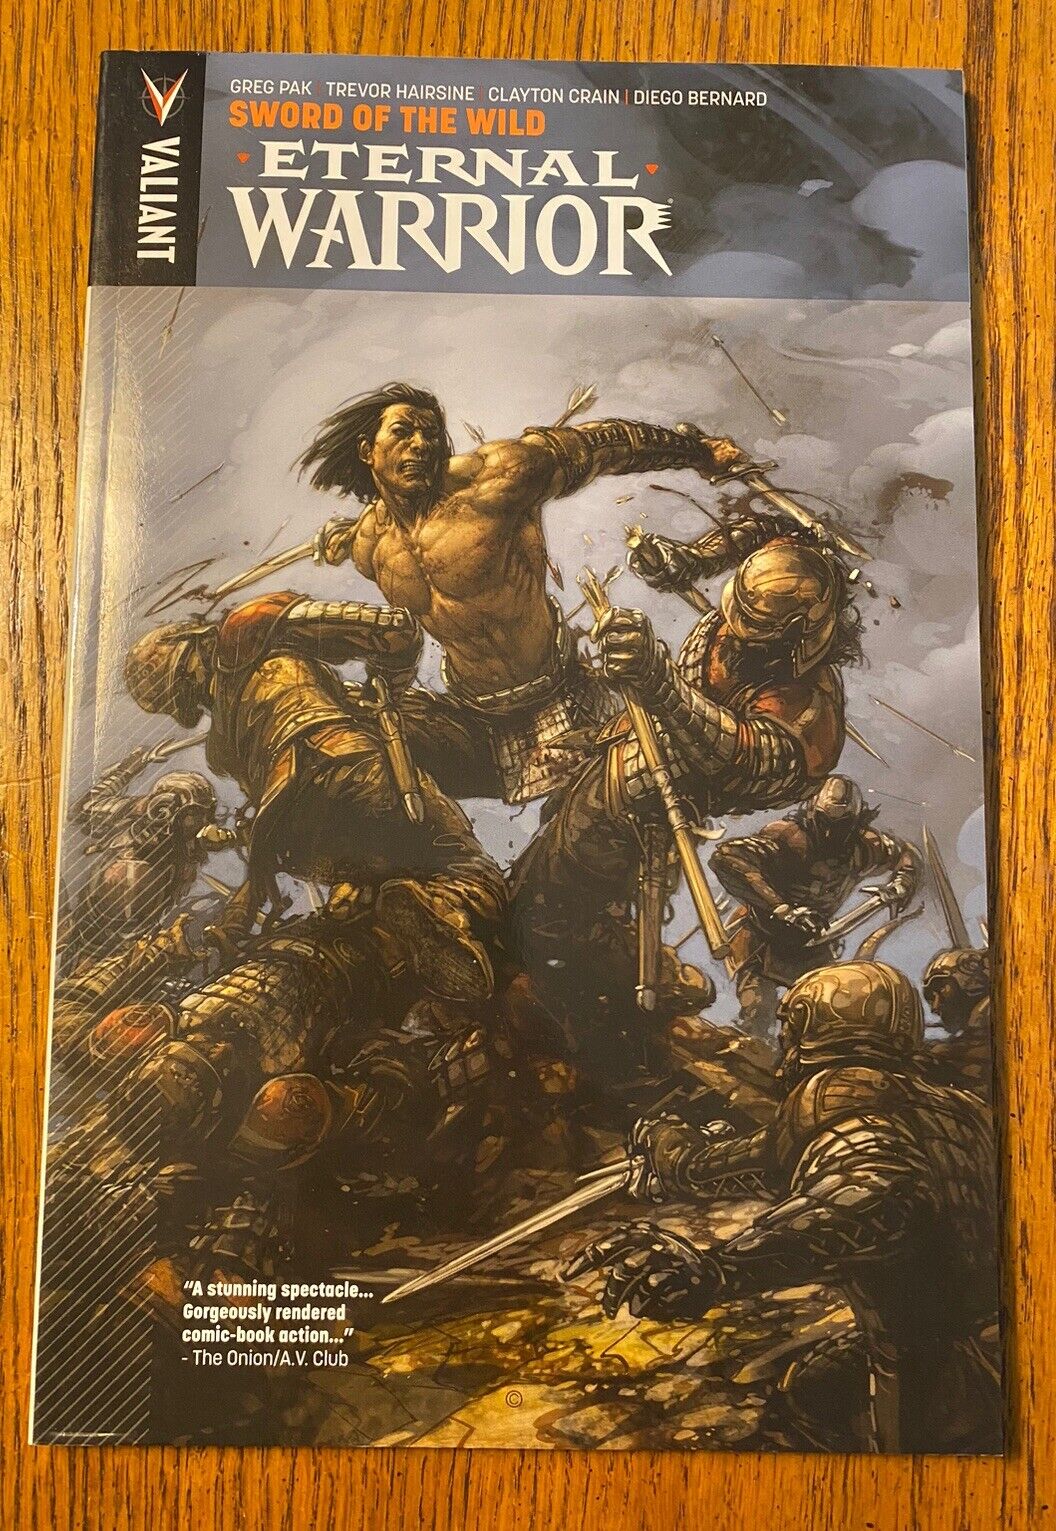 Eternal Warrior Sword of The Wild Vol 1 TPB/Graphic Novel Valiant Comic Book